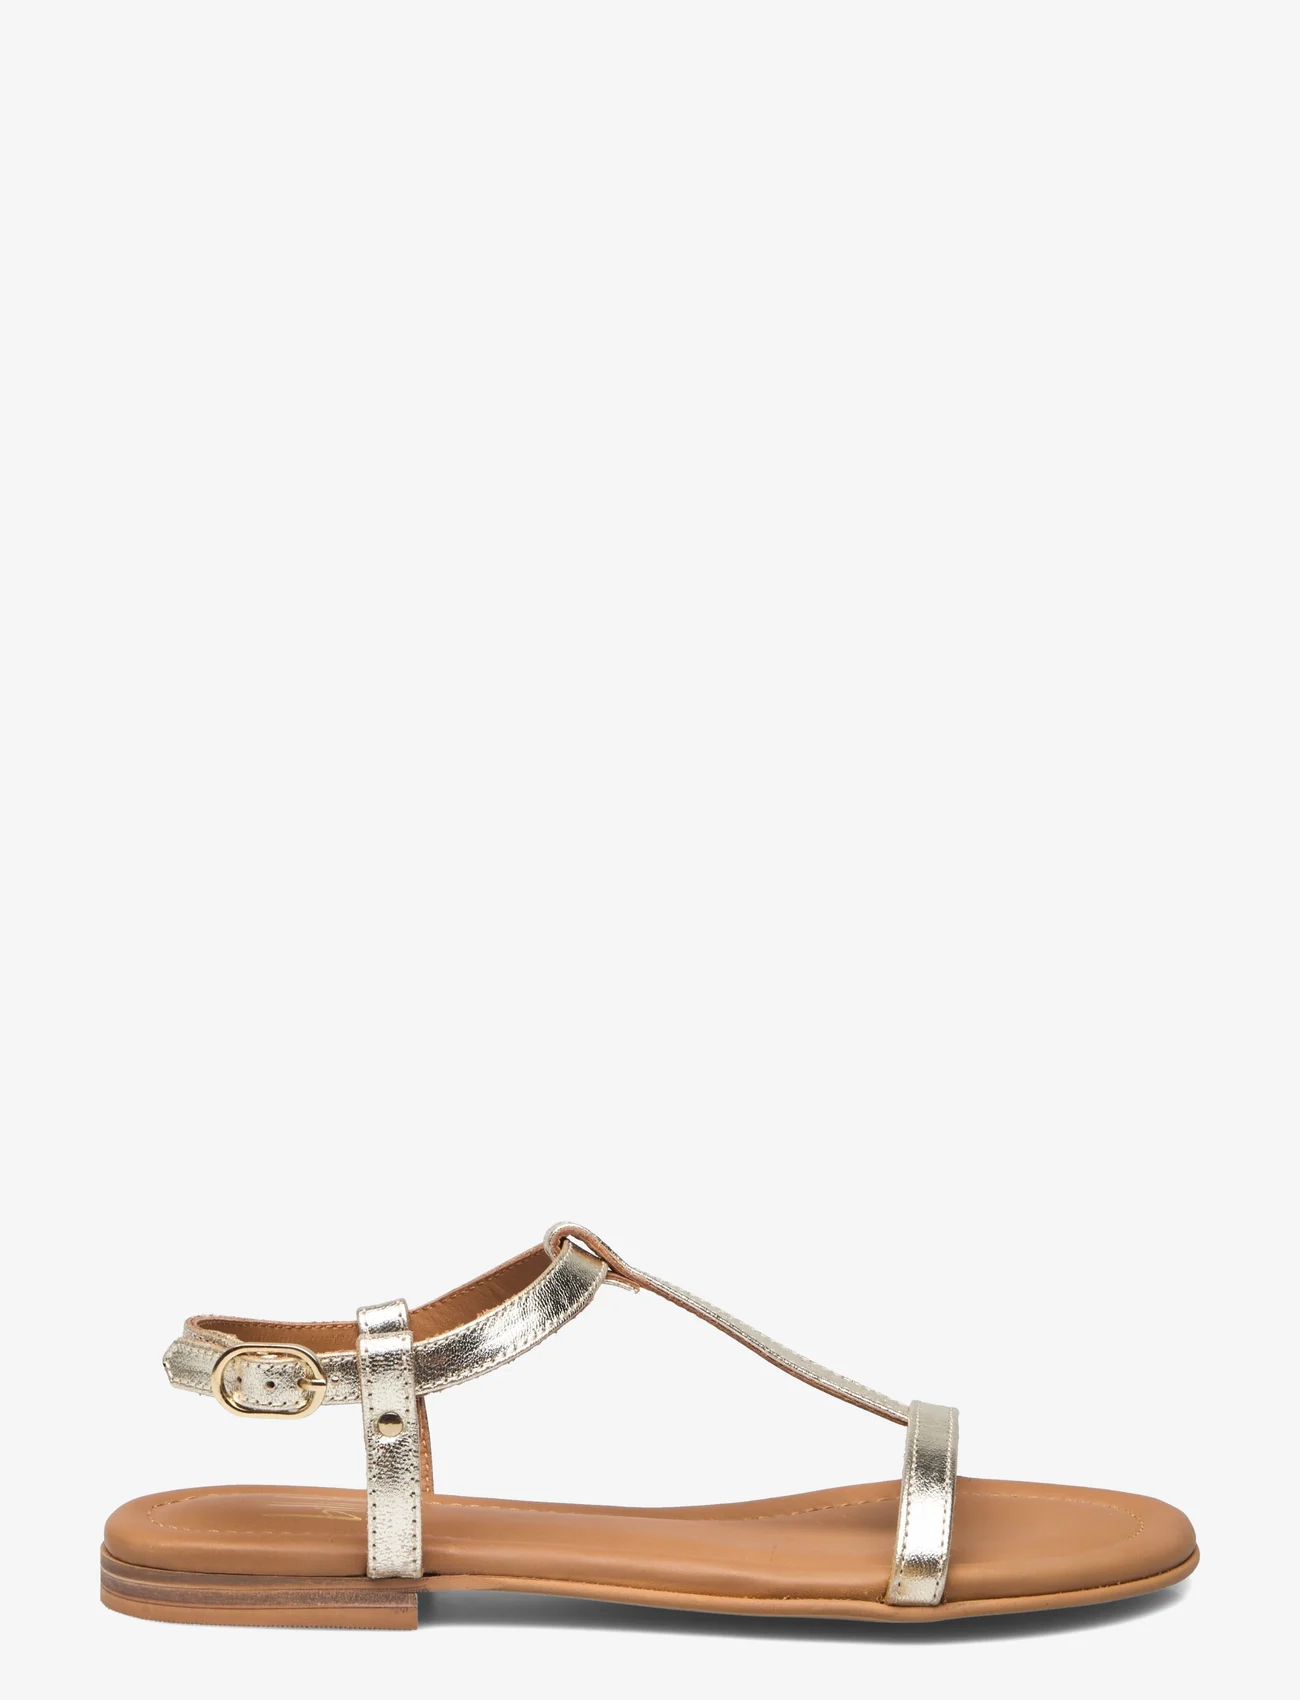 Billi Bi - Sandals - platte sandalen - gold nappa - 1